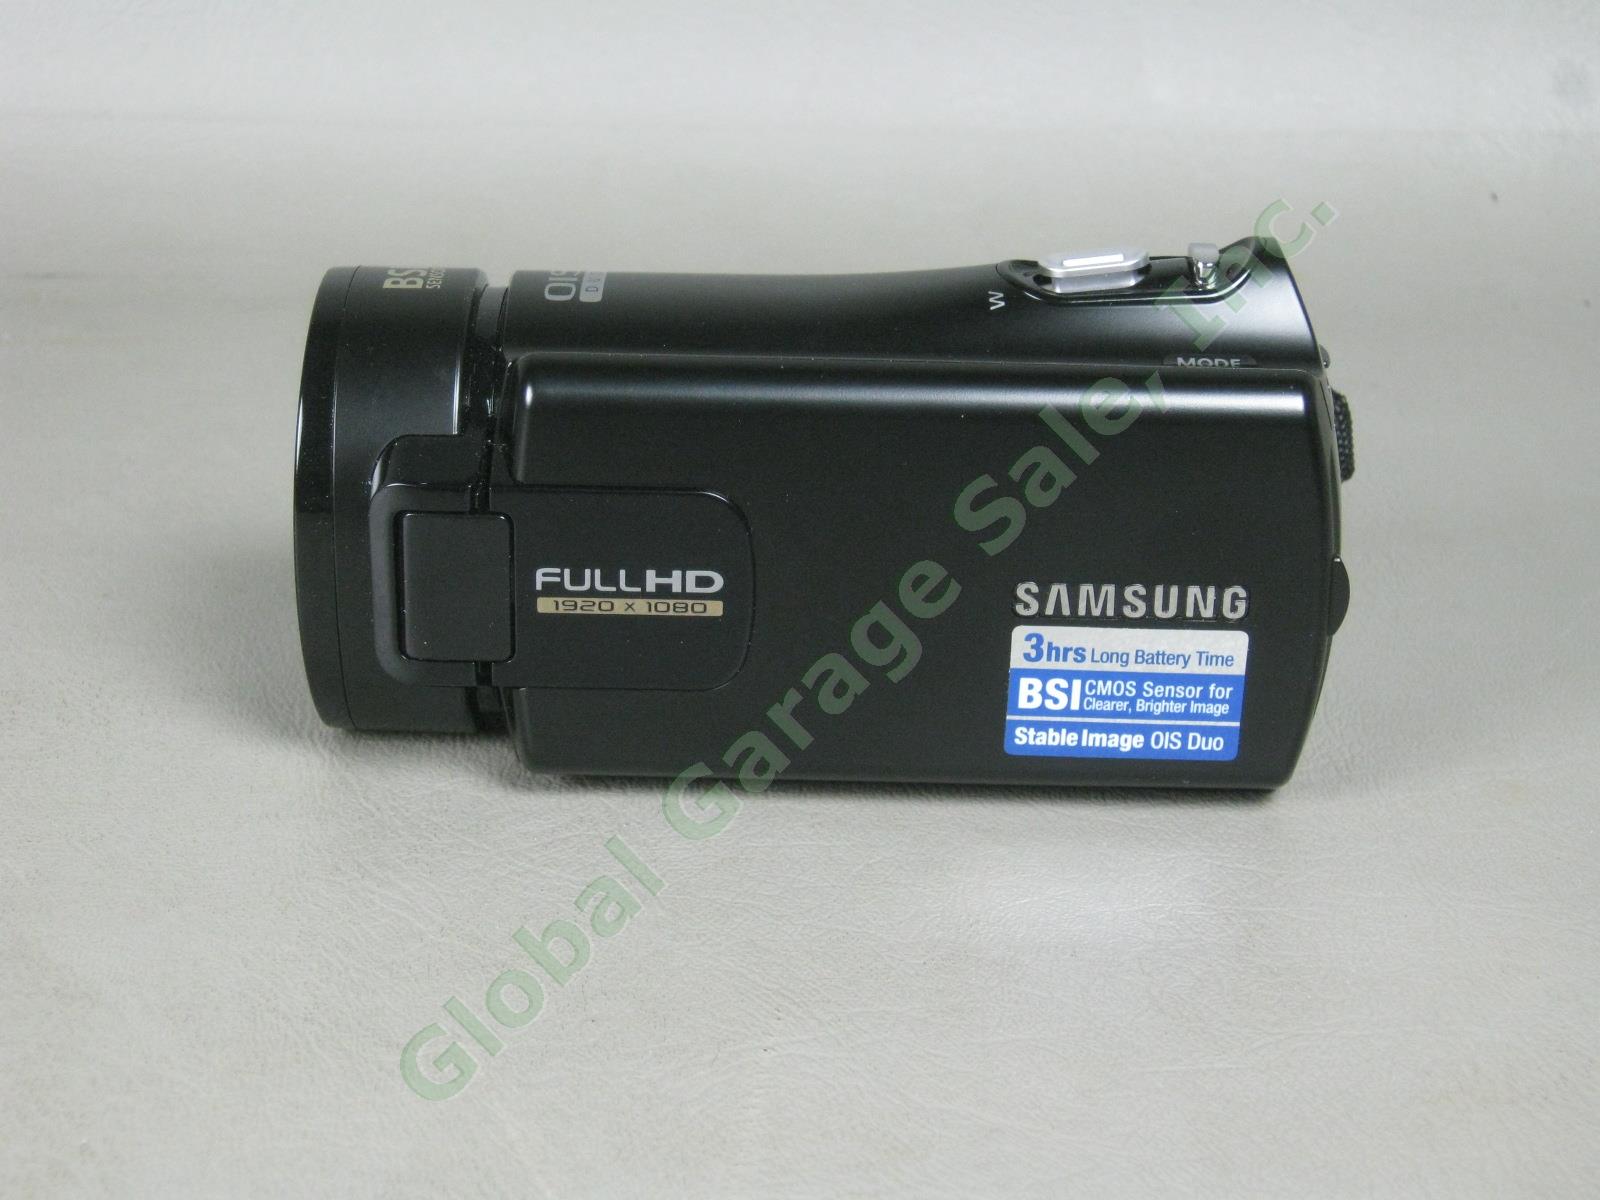 Samsung Full HD 1920x1080 1080i Camcorder HMX-H300BN/XAA Video Camera MINT COND! 1